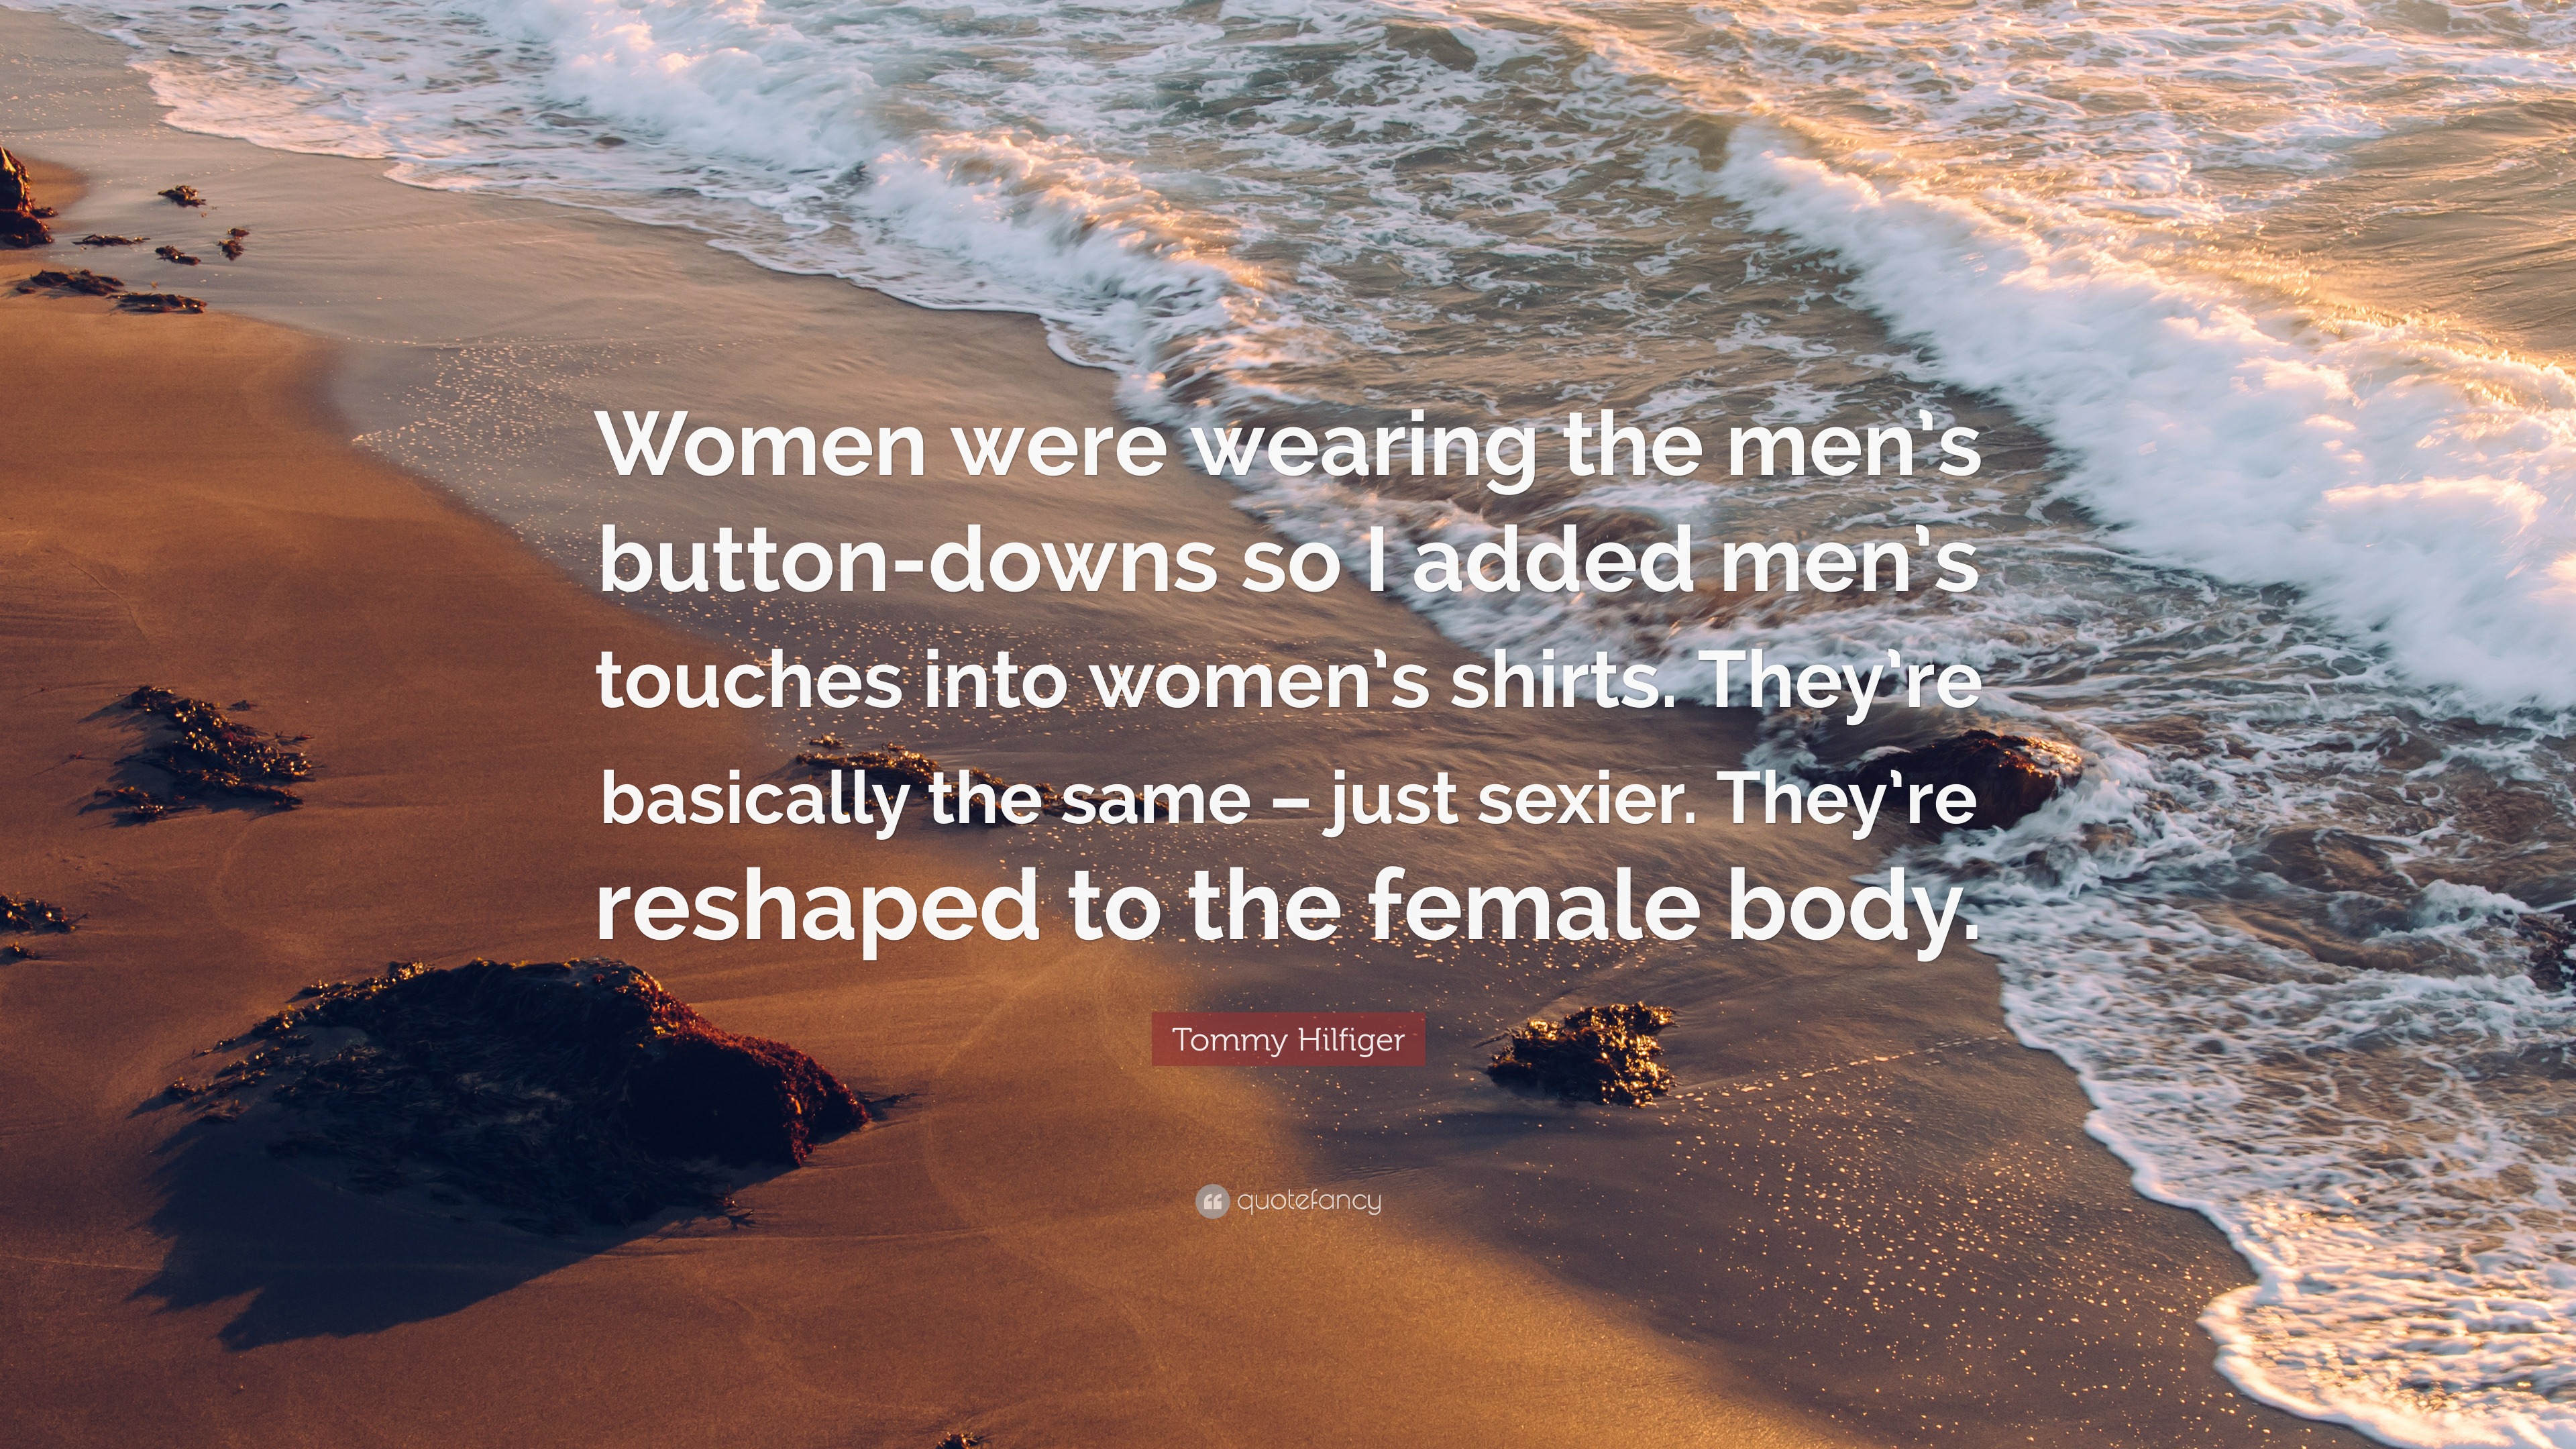 https://quotefancy.com/media/wallpaper/3840x2160/6185025-Tommy-Hilfiger-Quote-Women-were-wearing-the-men-s-button-downs-so.jpg